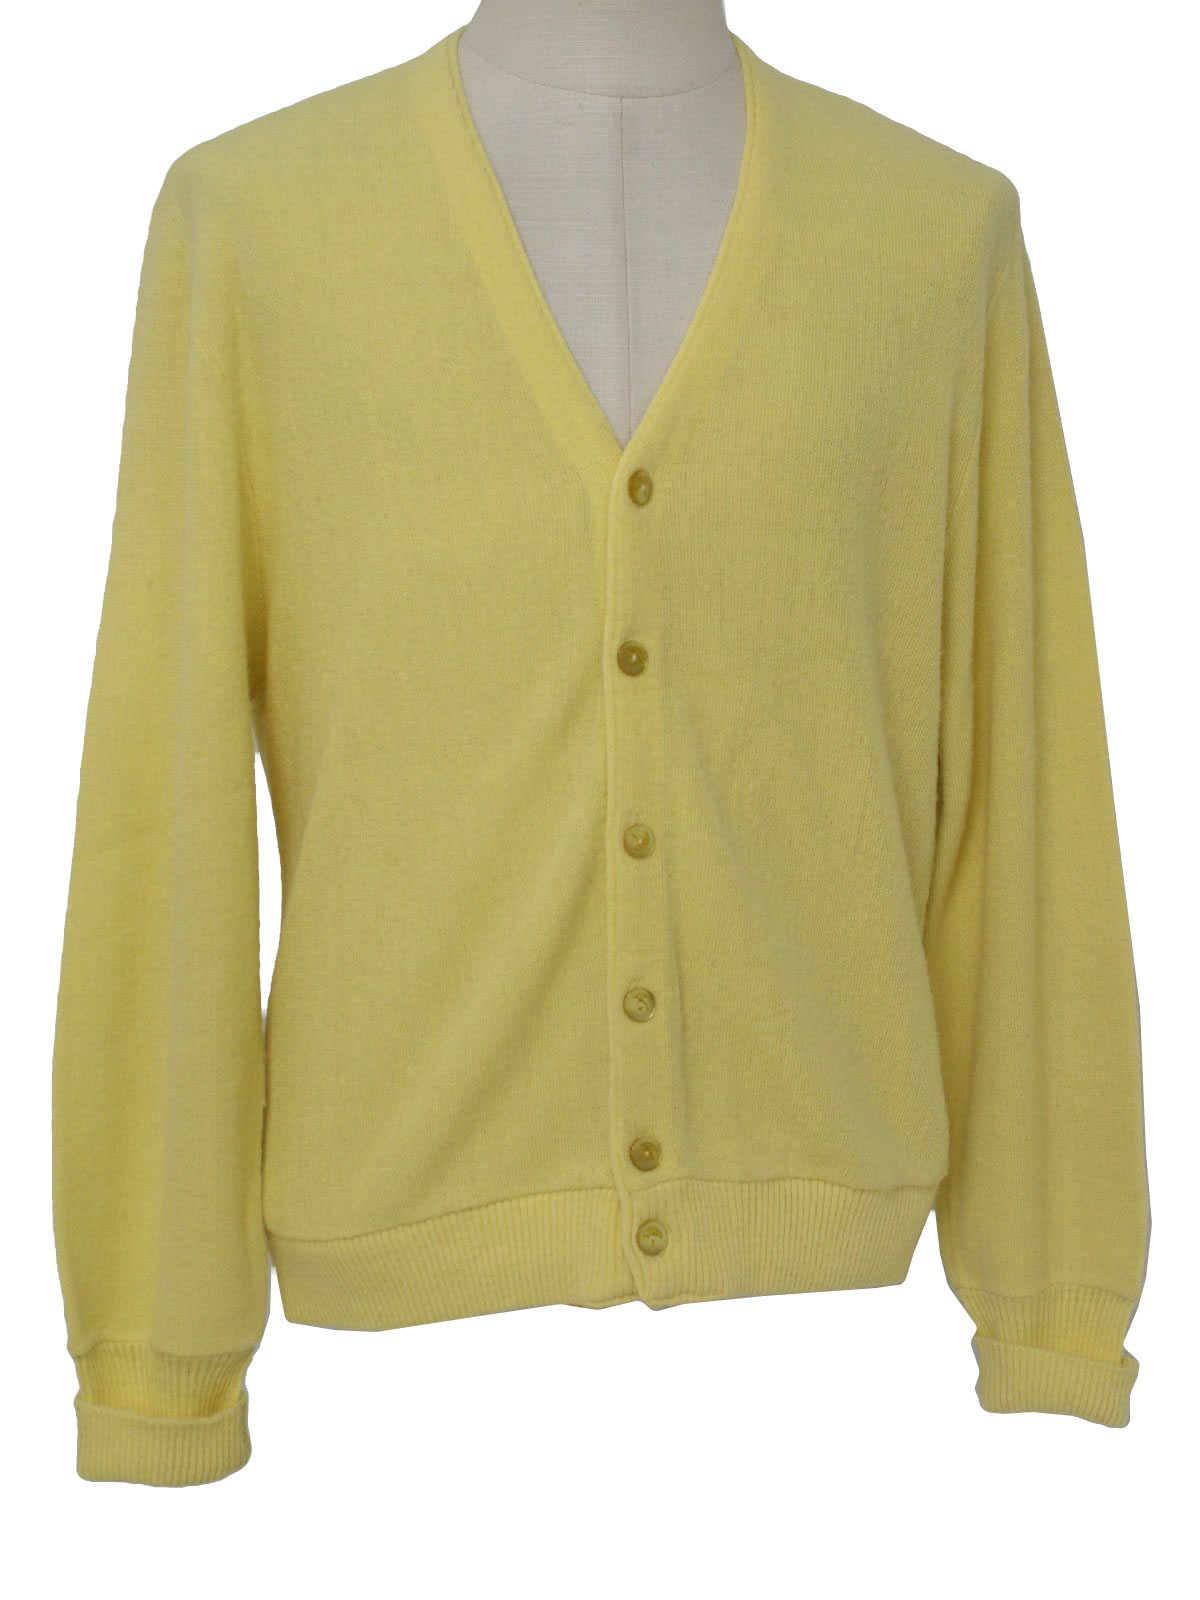 Retro 80's Caridgan Sweater: 80s -Arnold Palmer- Mens butter yellow ...